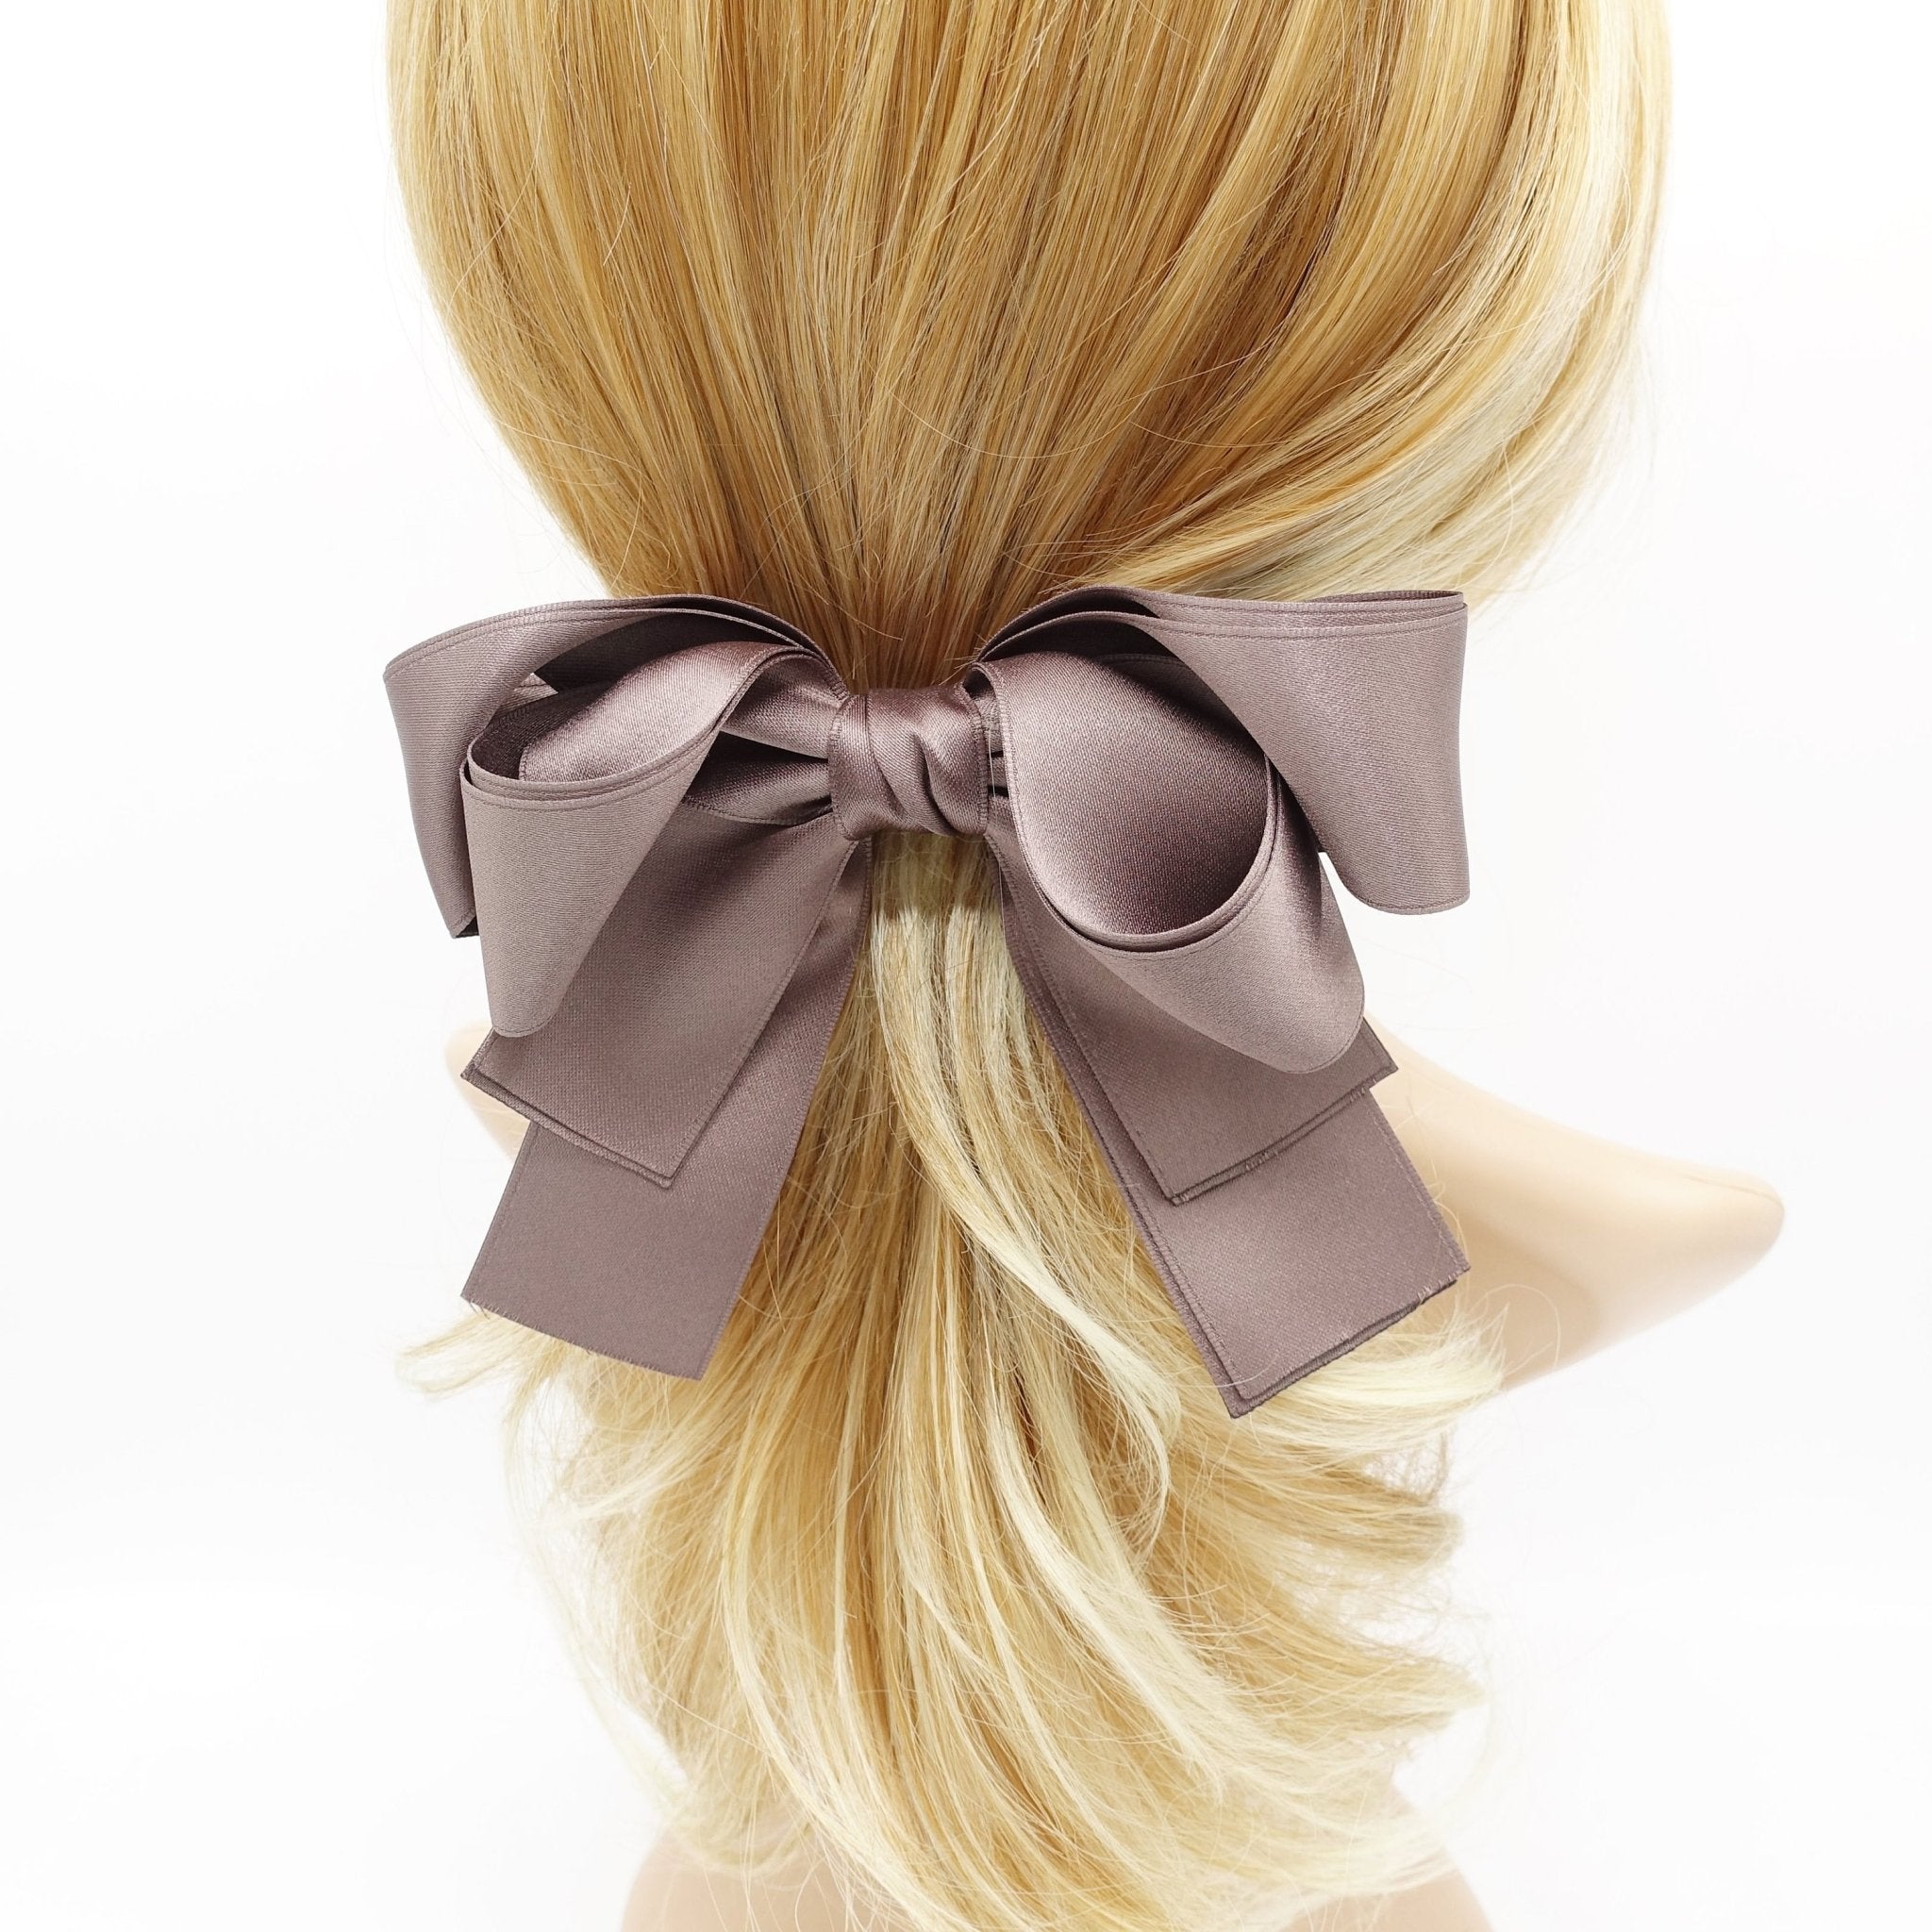 veryshine.com claw/banana/barrette Mocha brown double layered satin hair bow basic style hair accessory for women